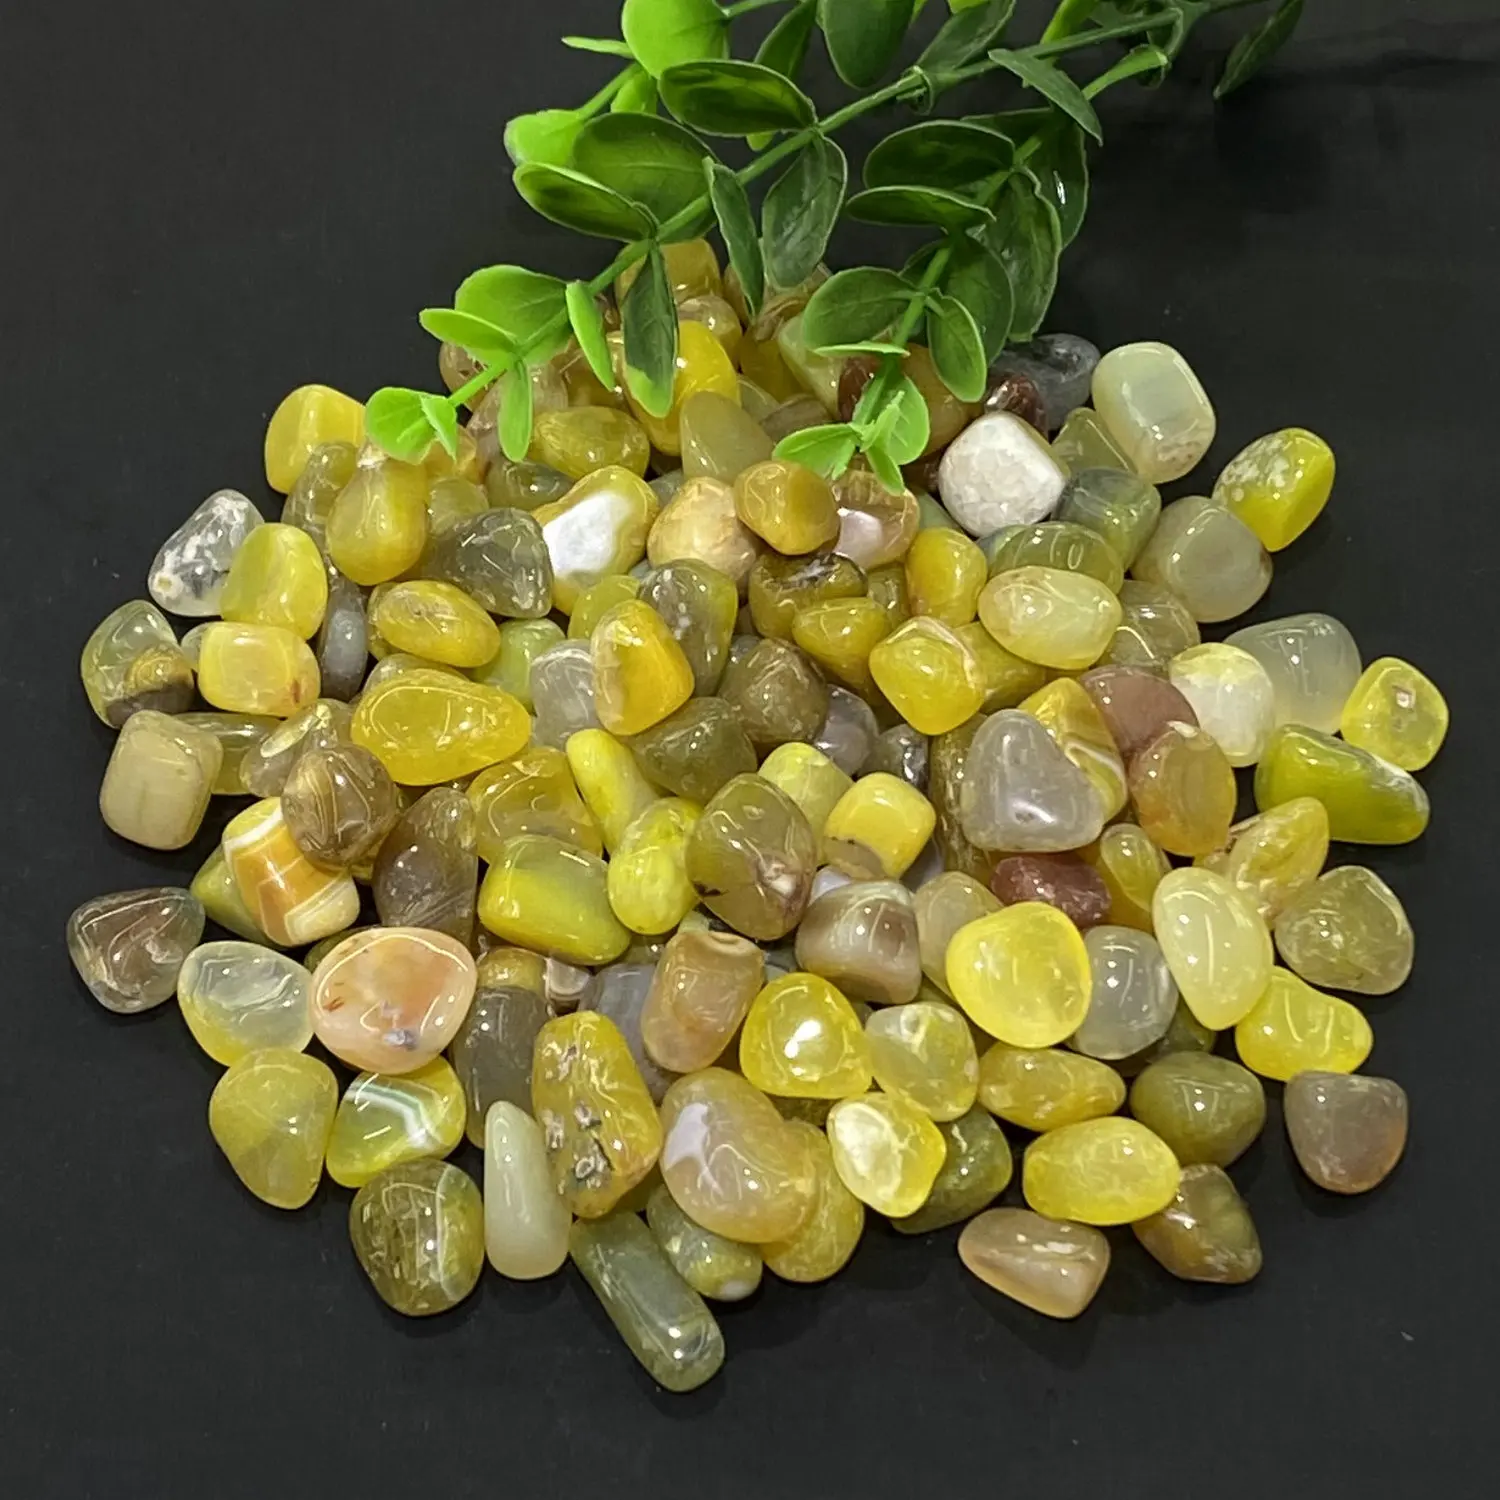 

12-15mm 500g Natural Yellow Agate Gravel Original Stone Purify Degaussing Quartz Crystals Minerals Specimen Health Decoration